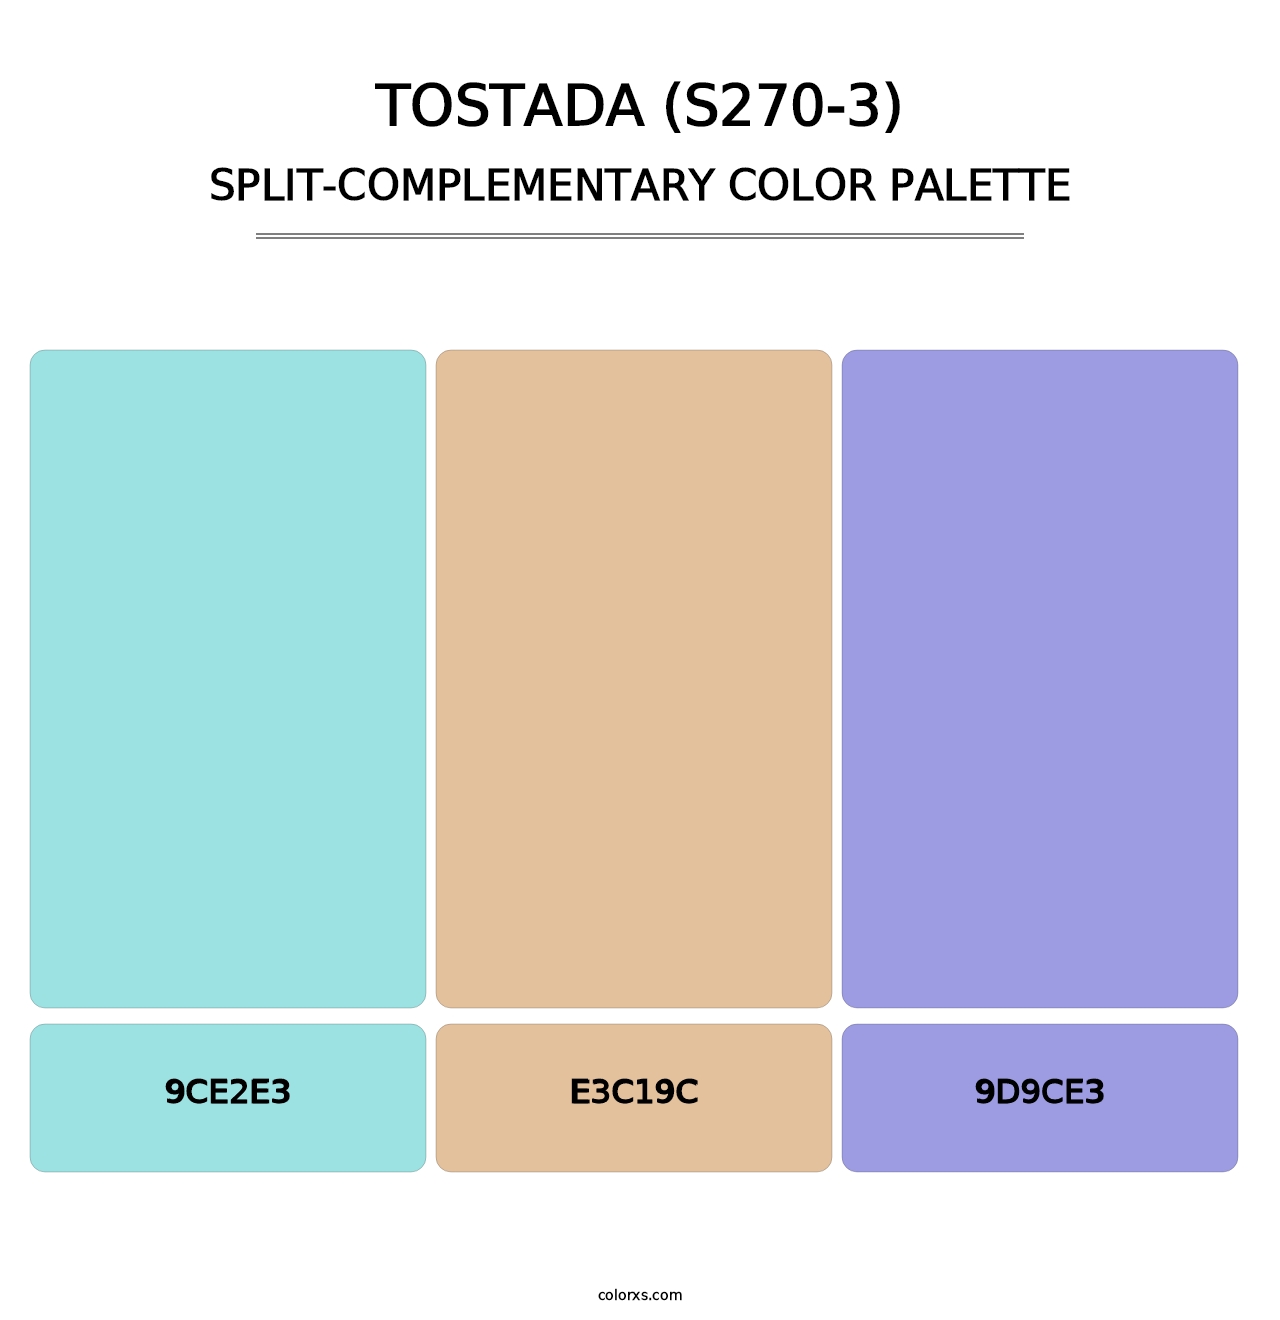 Tostada (S270-3) - Split-Complementary Color Palette